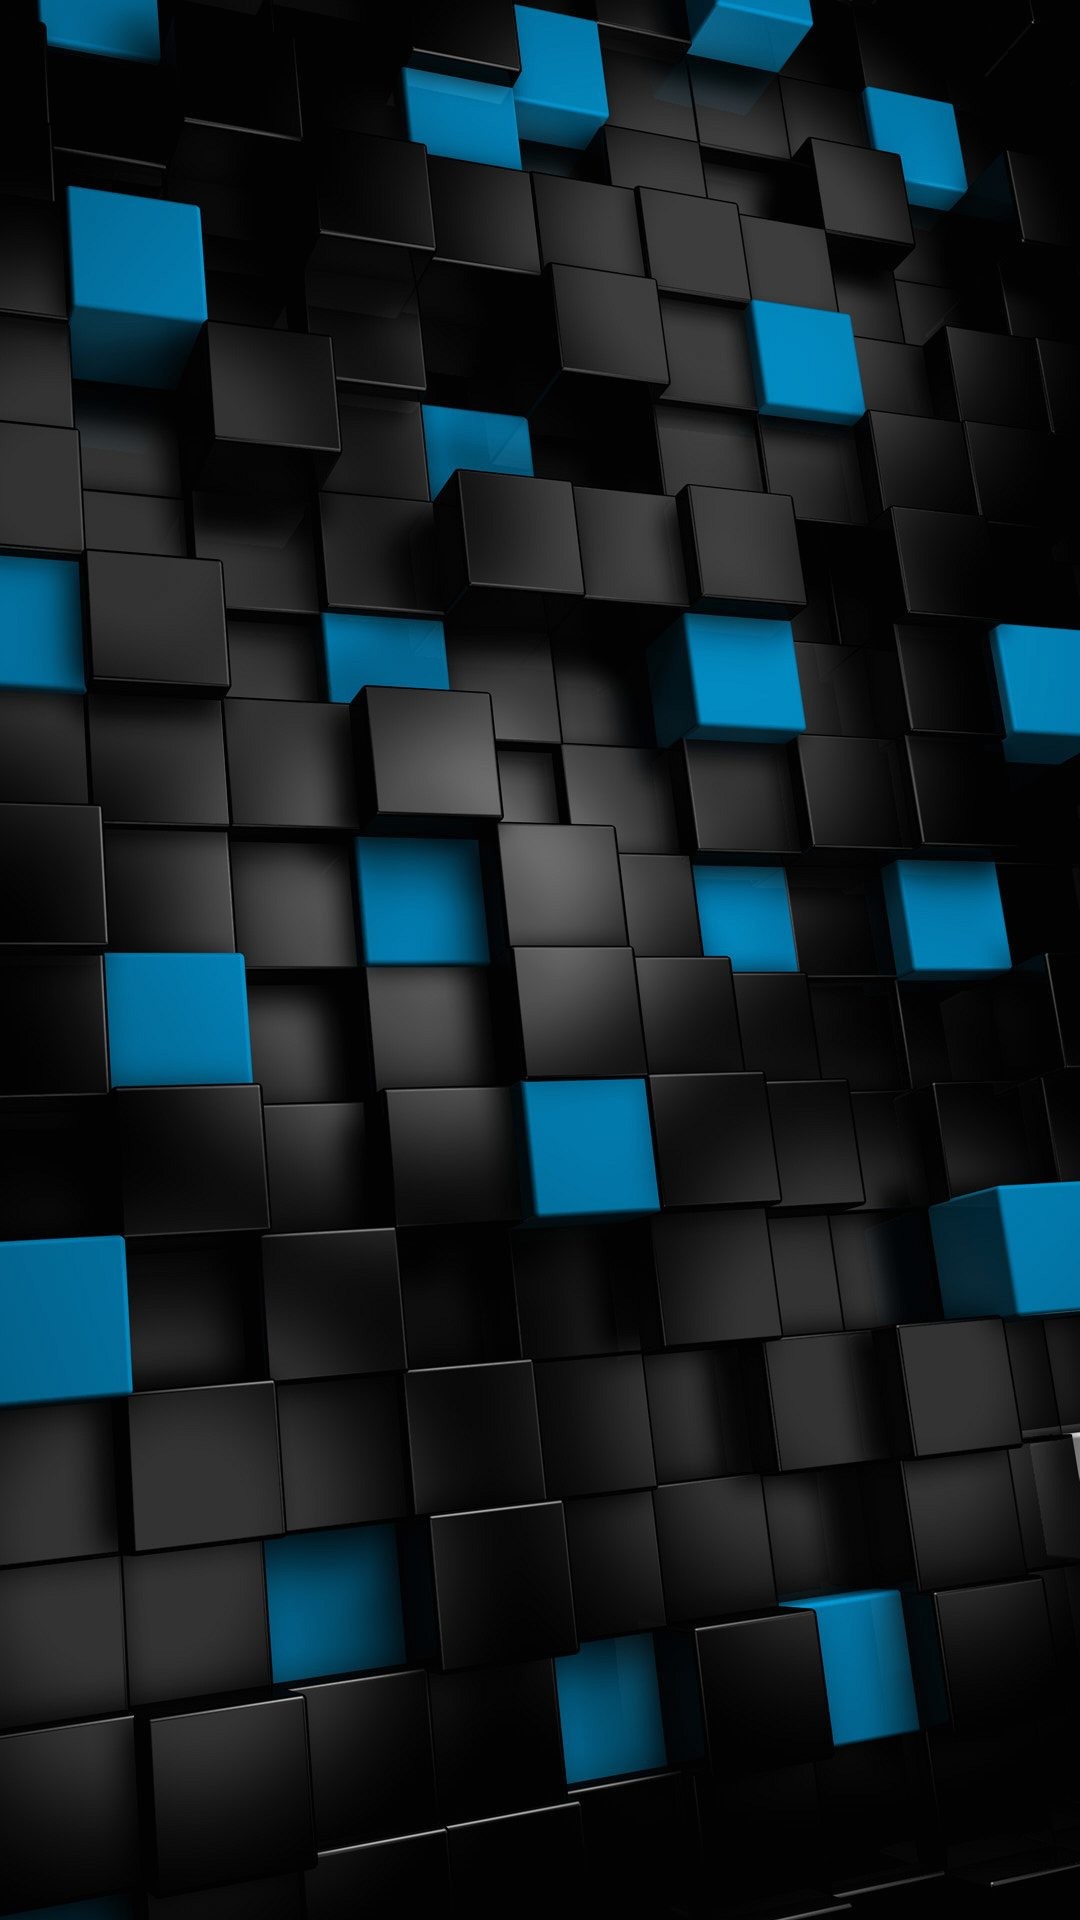 1080x1920 Wallpaper full hd 1080 x 1920 smartphone 3d cubes black blue